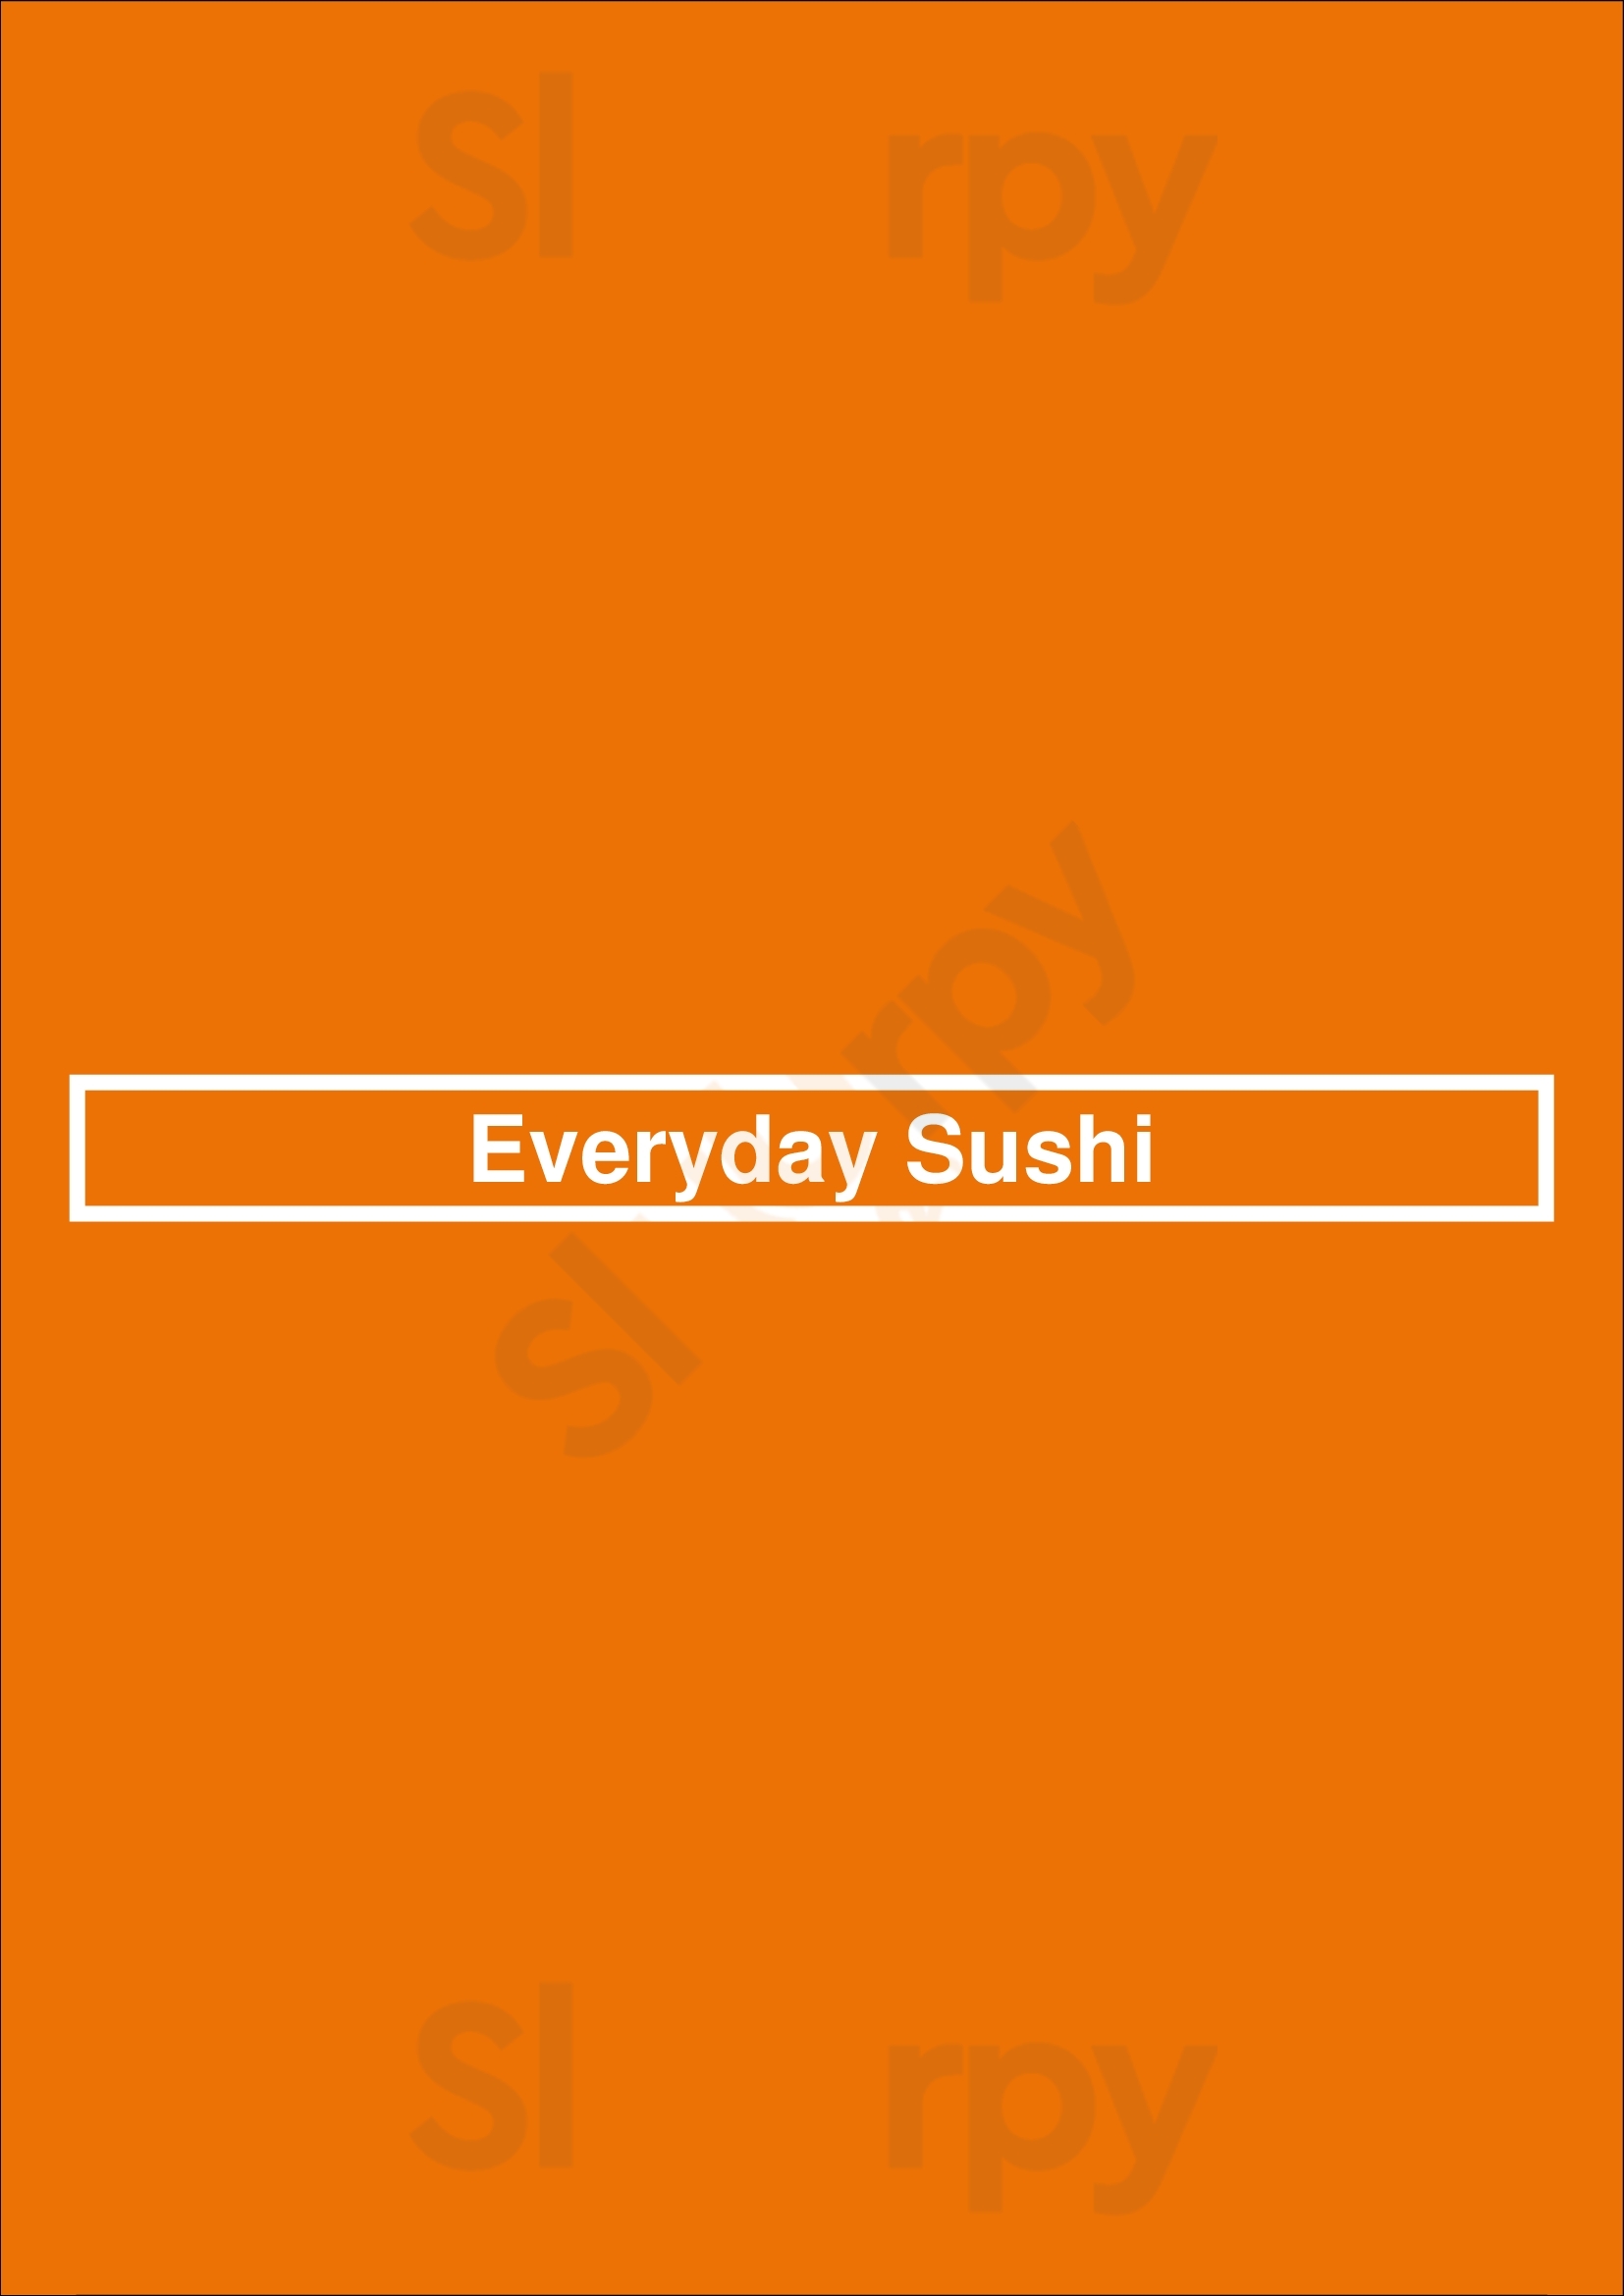 Everyday Sushi Vancouver Menu - 1